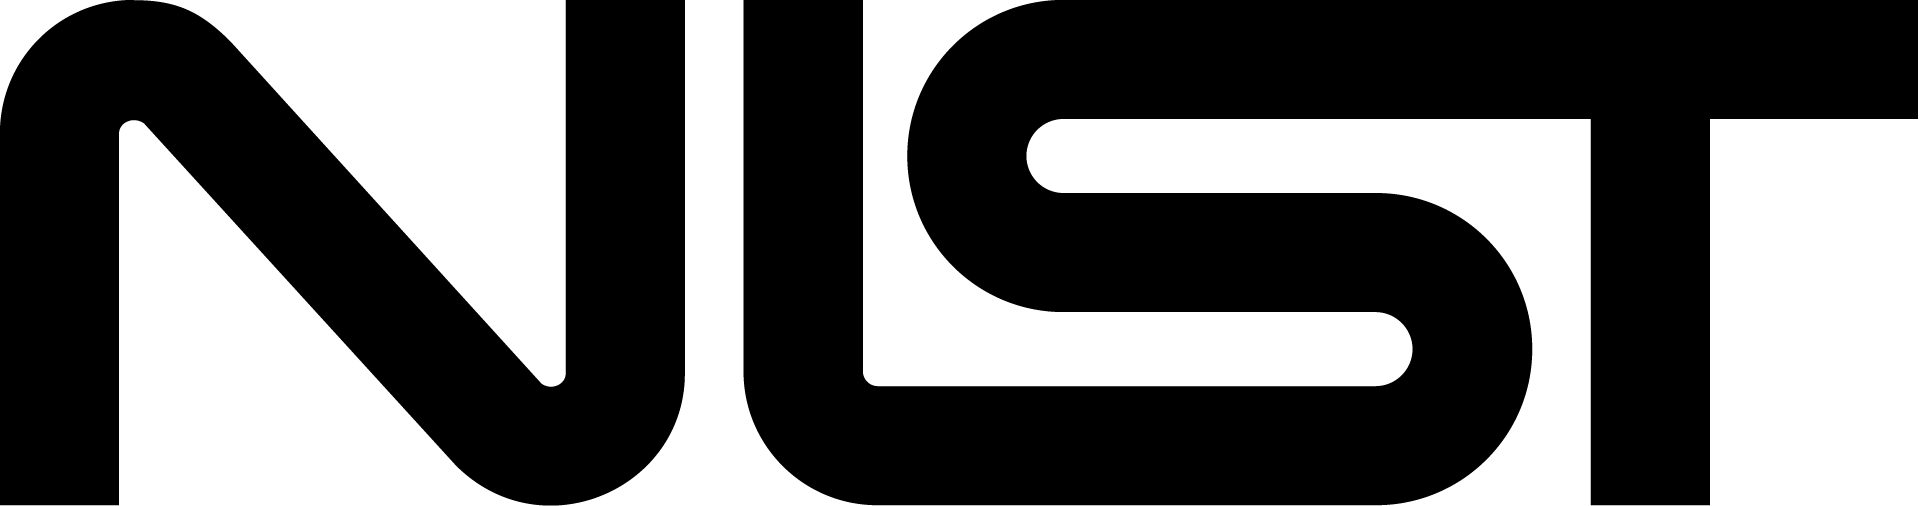 NICST logo